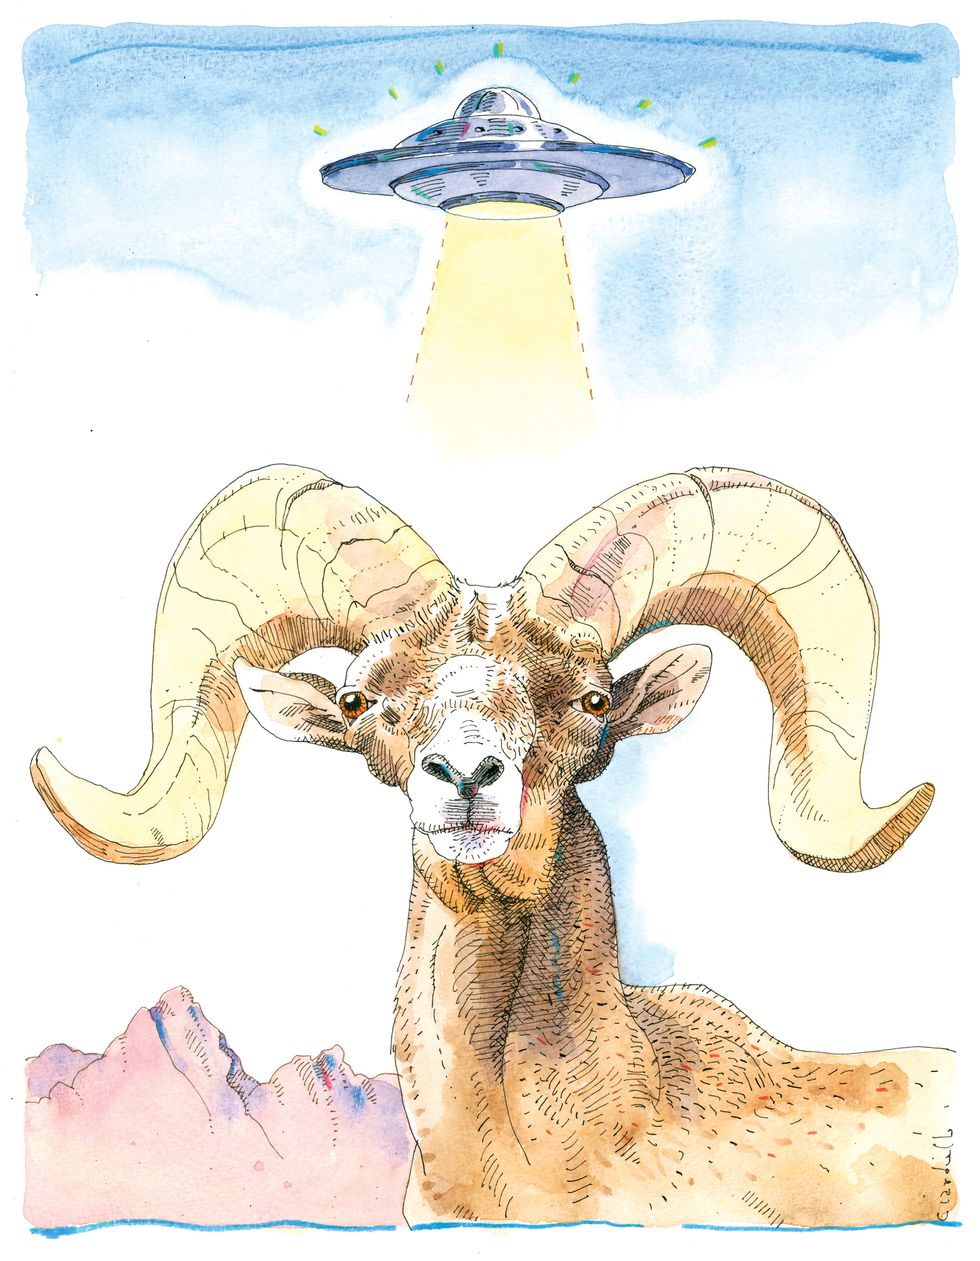 ken layne, desert oracle, illustration, joe ciradiello, ram, ufo